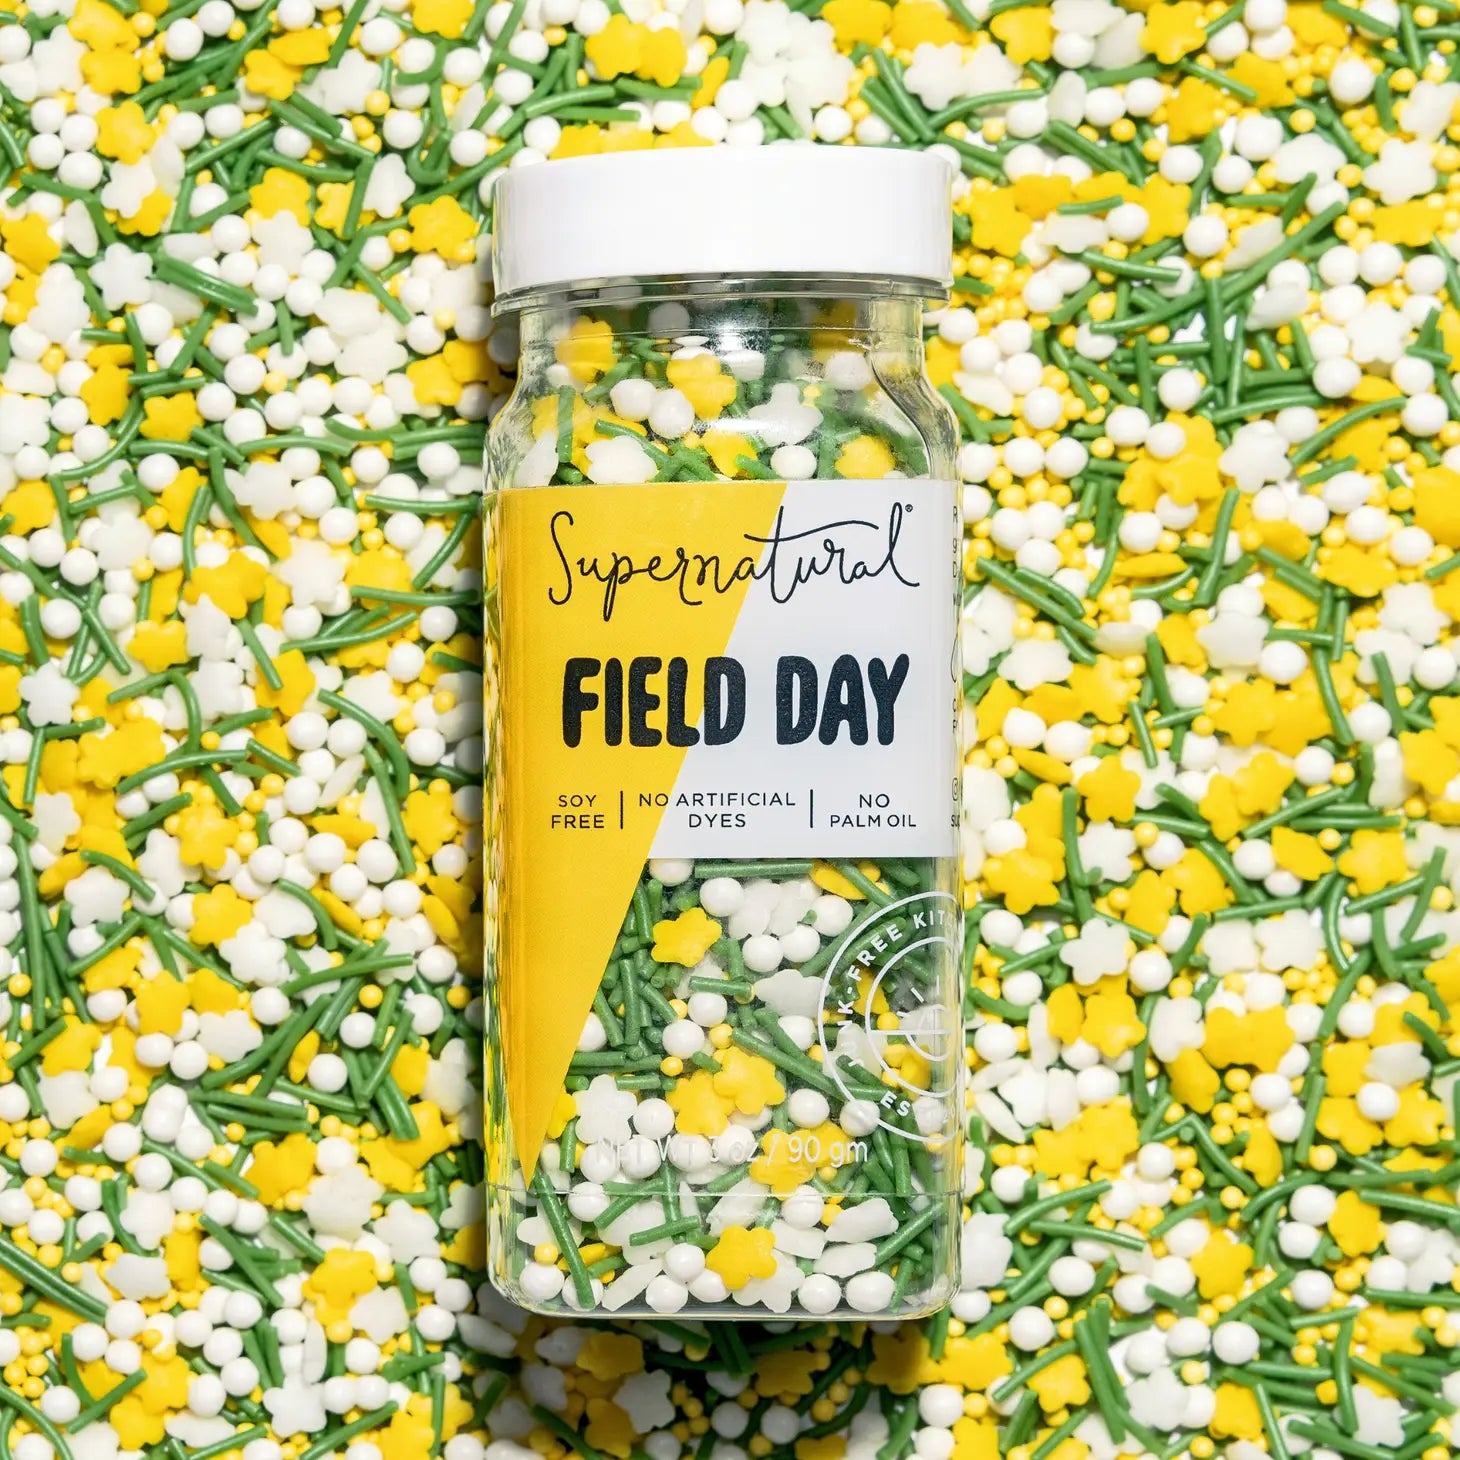 Dye-Free Field Day Sprinkles